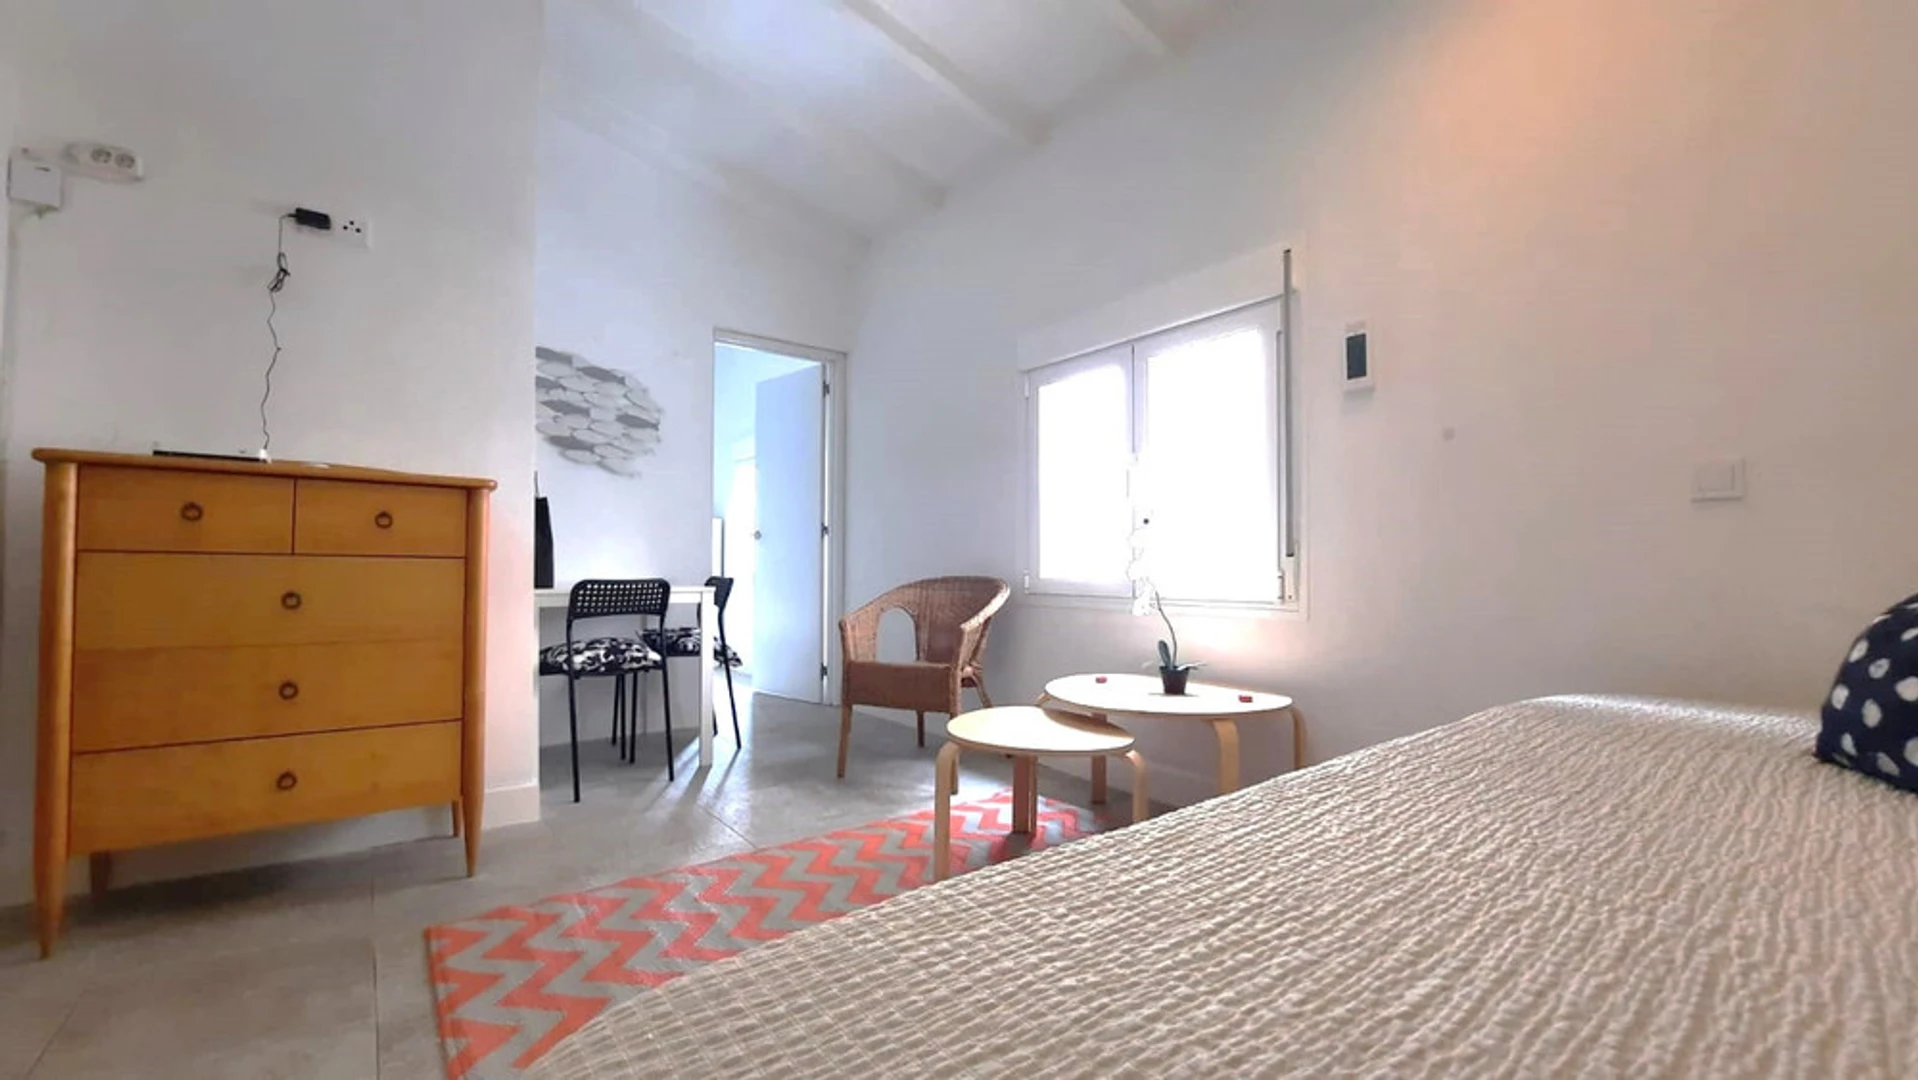 Modern and bright flat in Palma De Mallorca